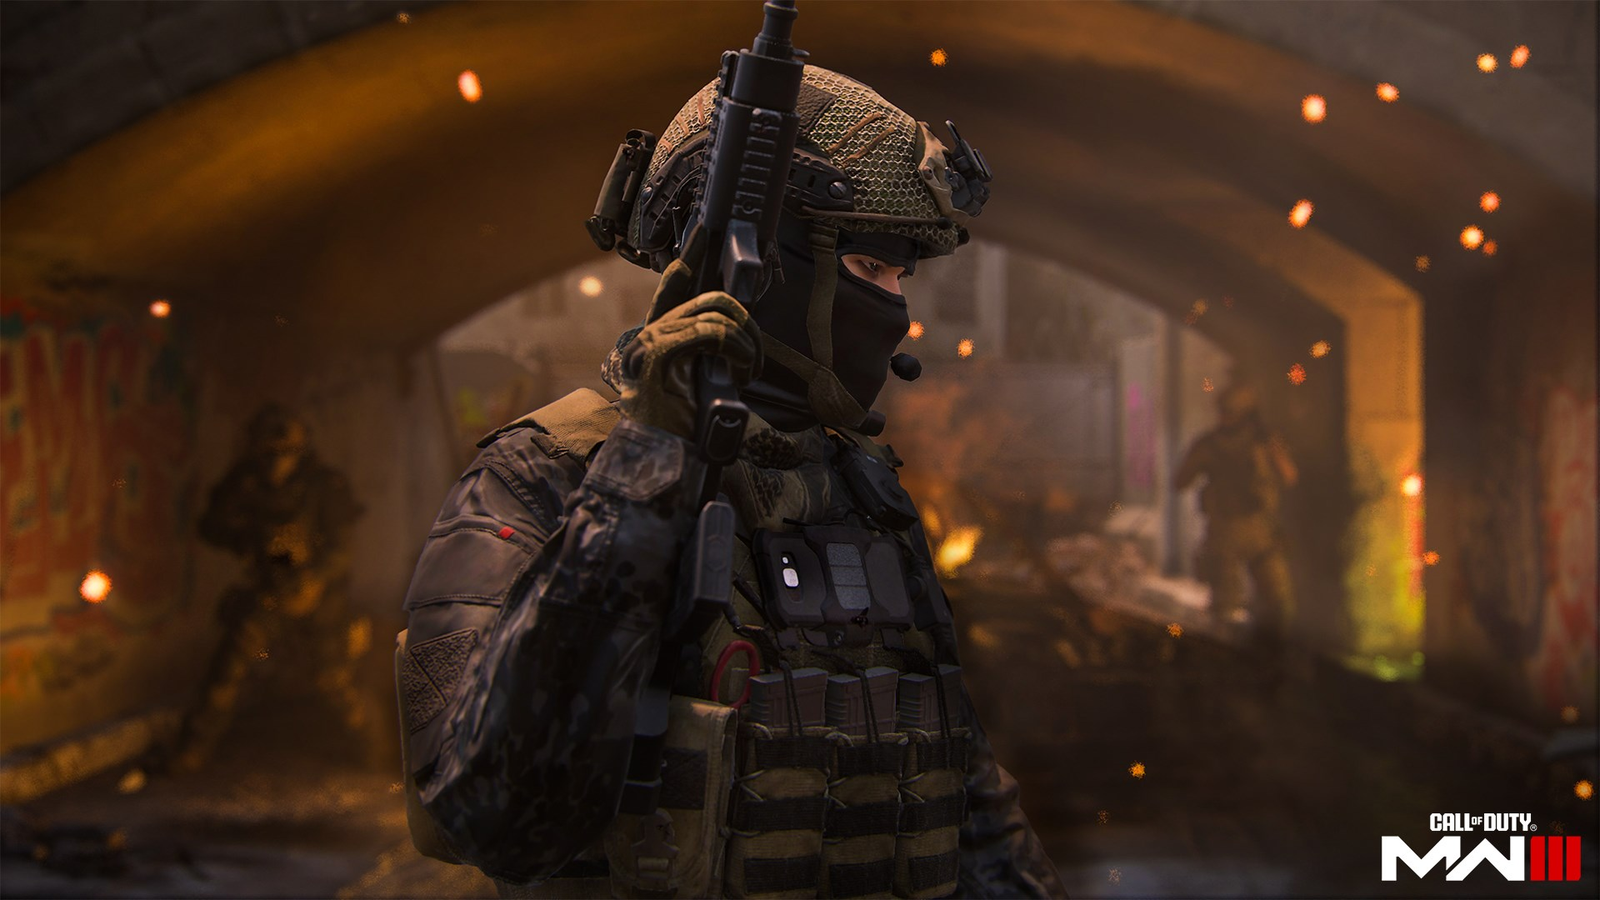 Call of Duty: Modern Warfare 3 Reveals Multiplayer Gameplay